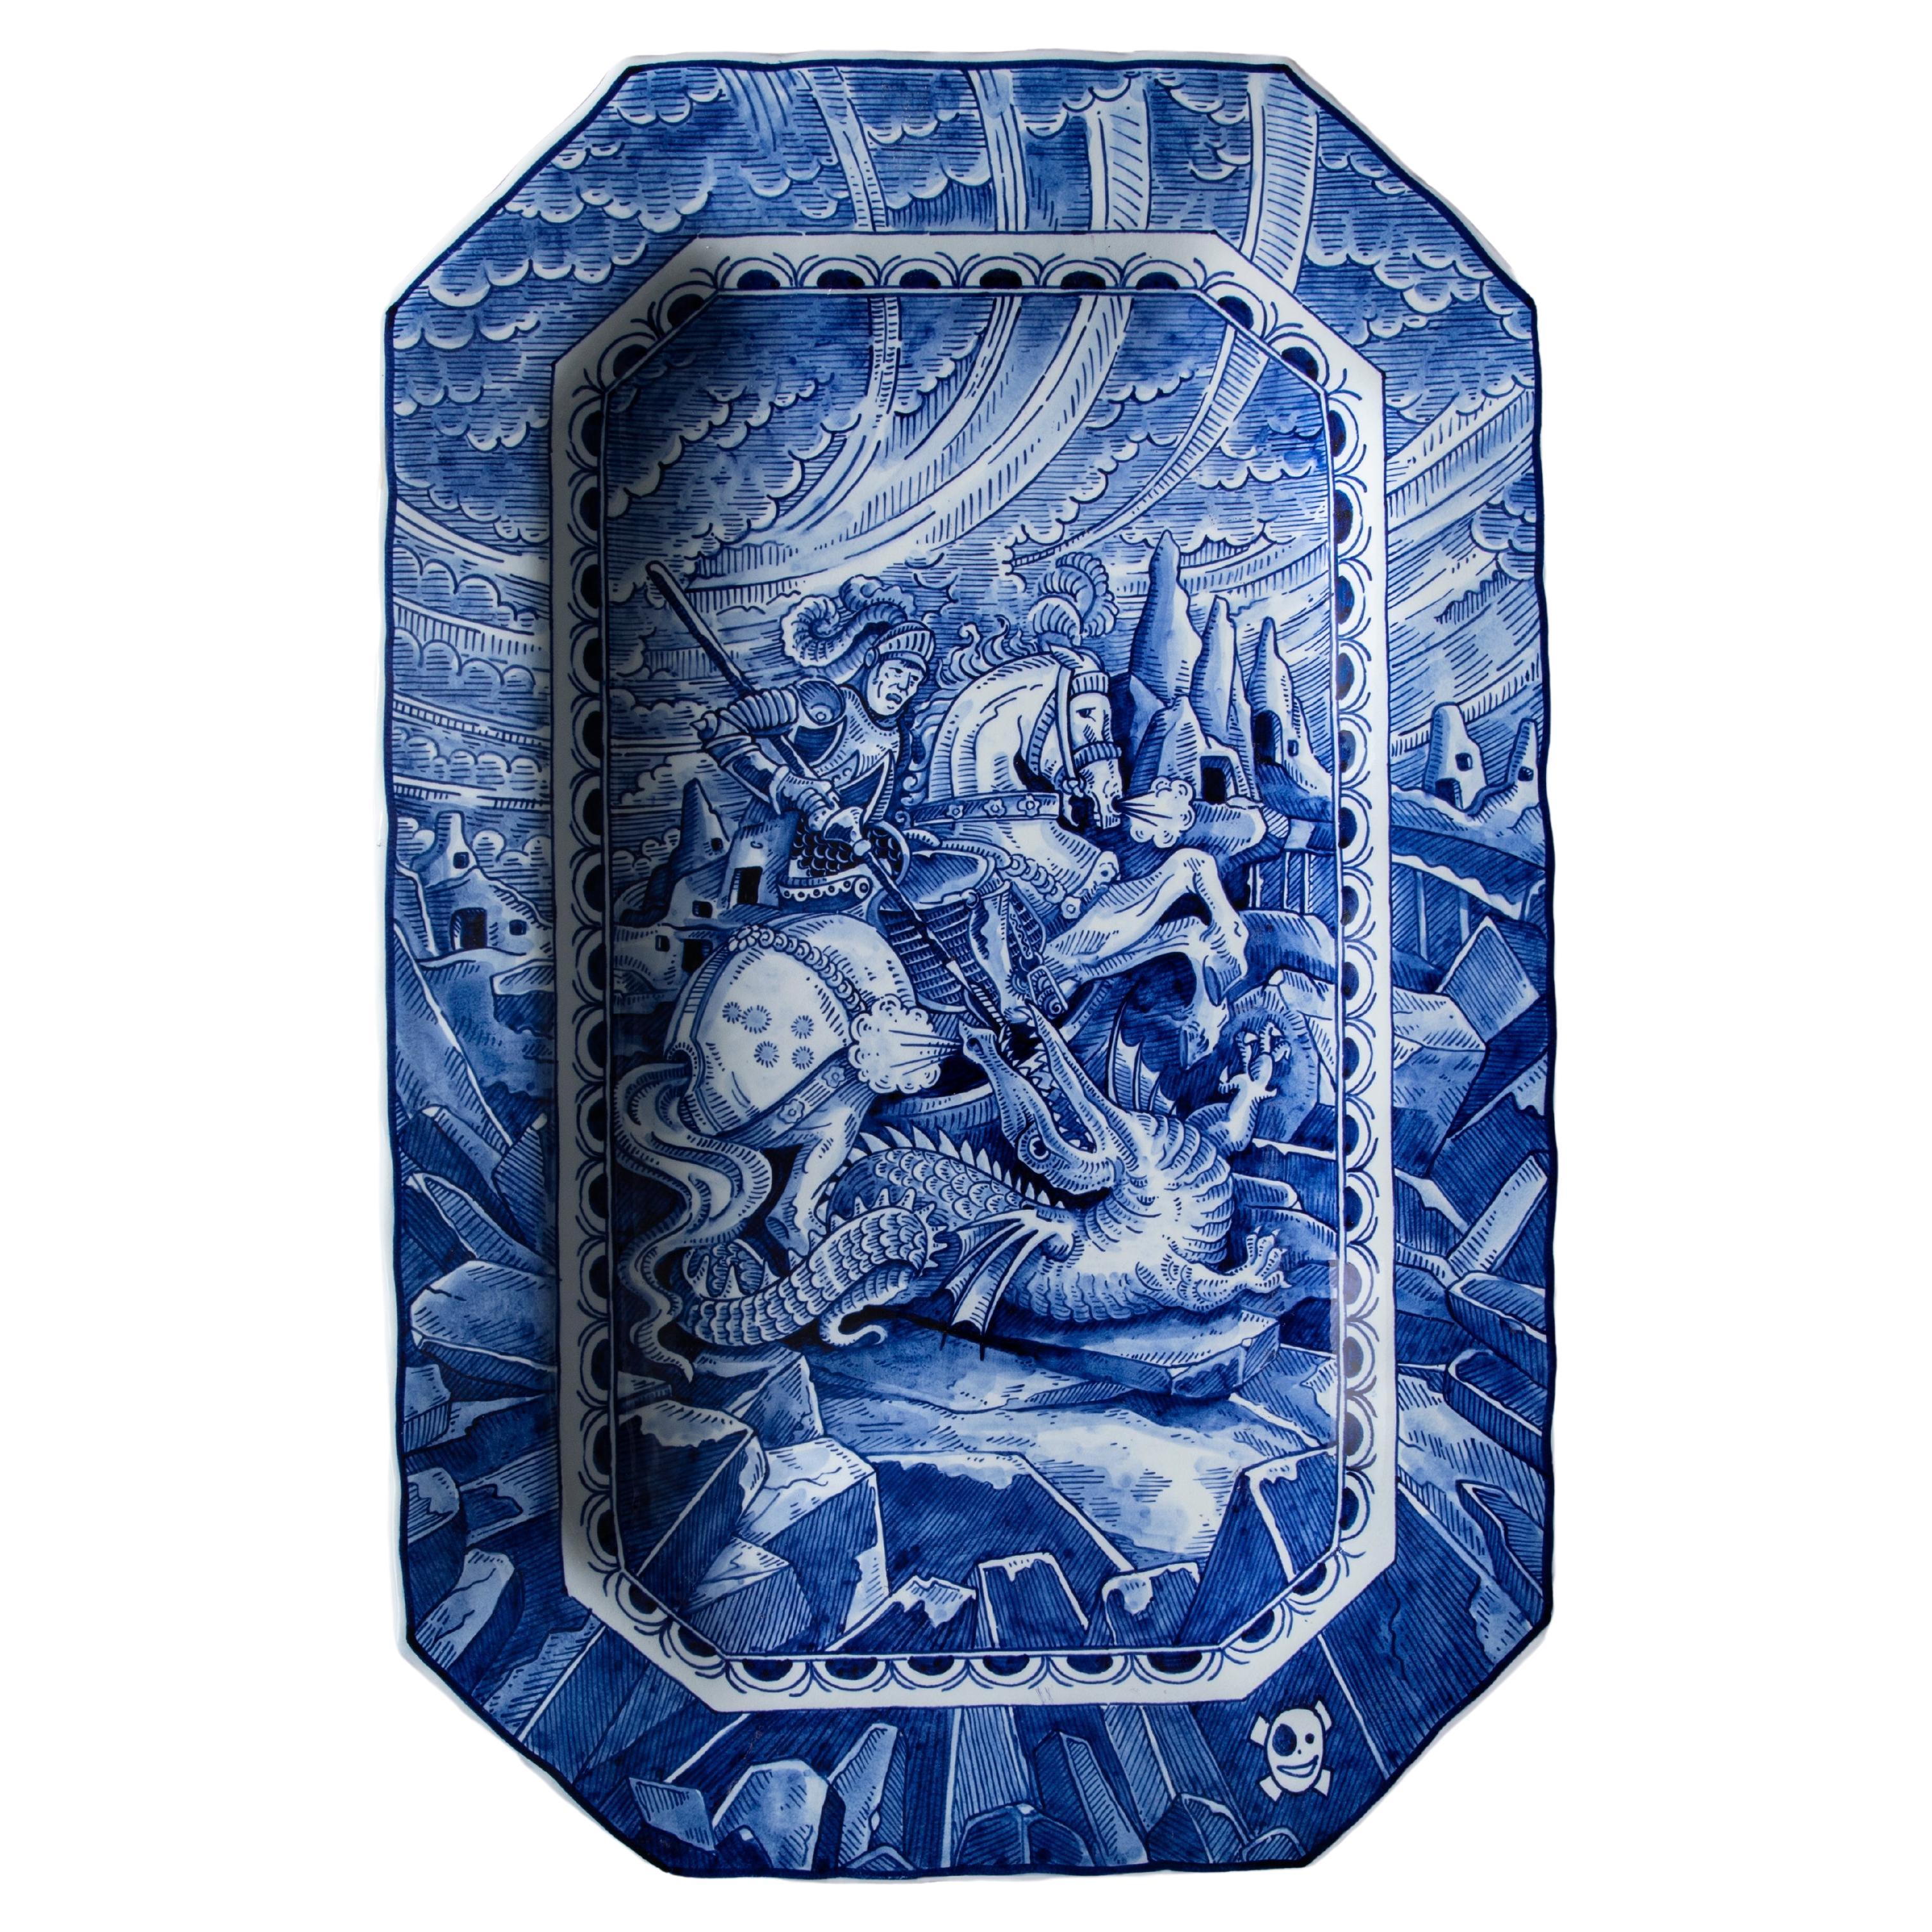 Dutch Delft Blue handpainted wall plate by Royal Delft, Schiffmacher Royal Blue 